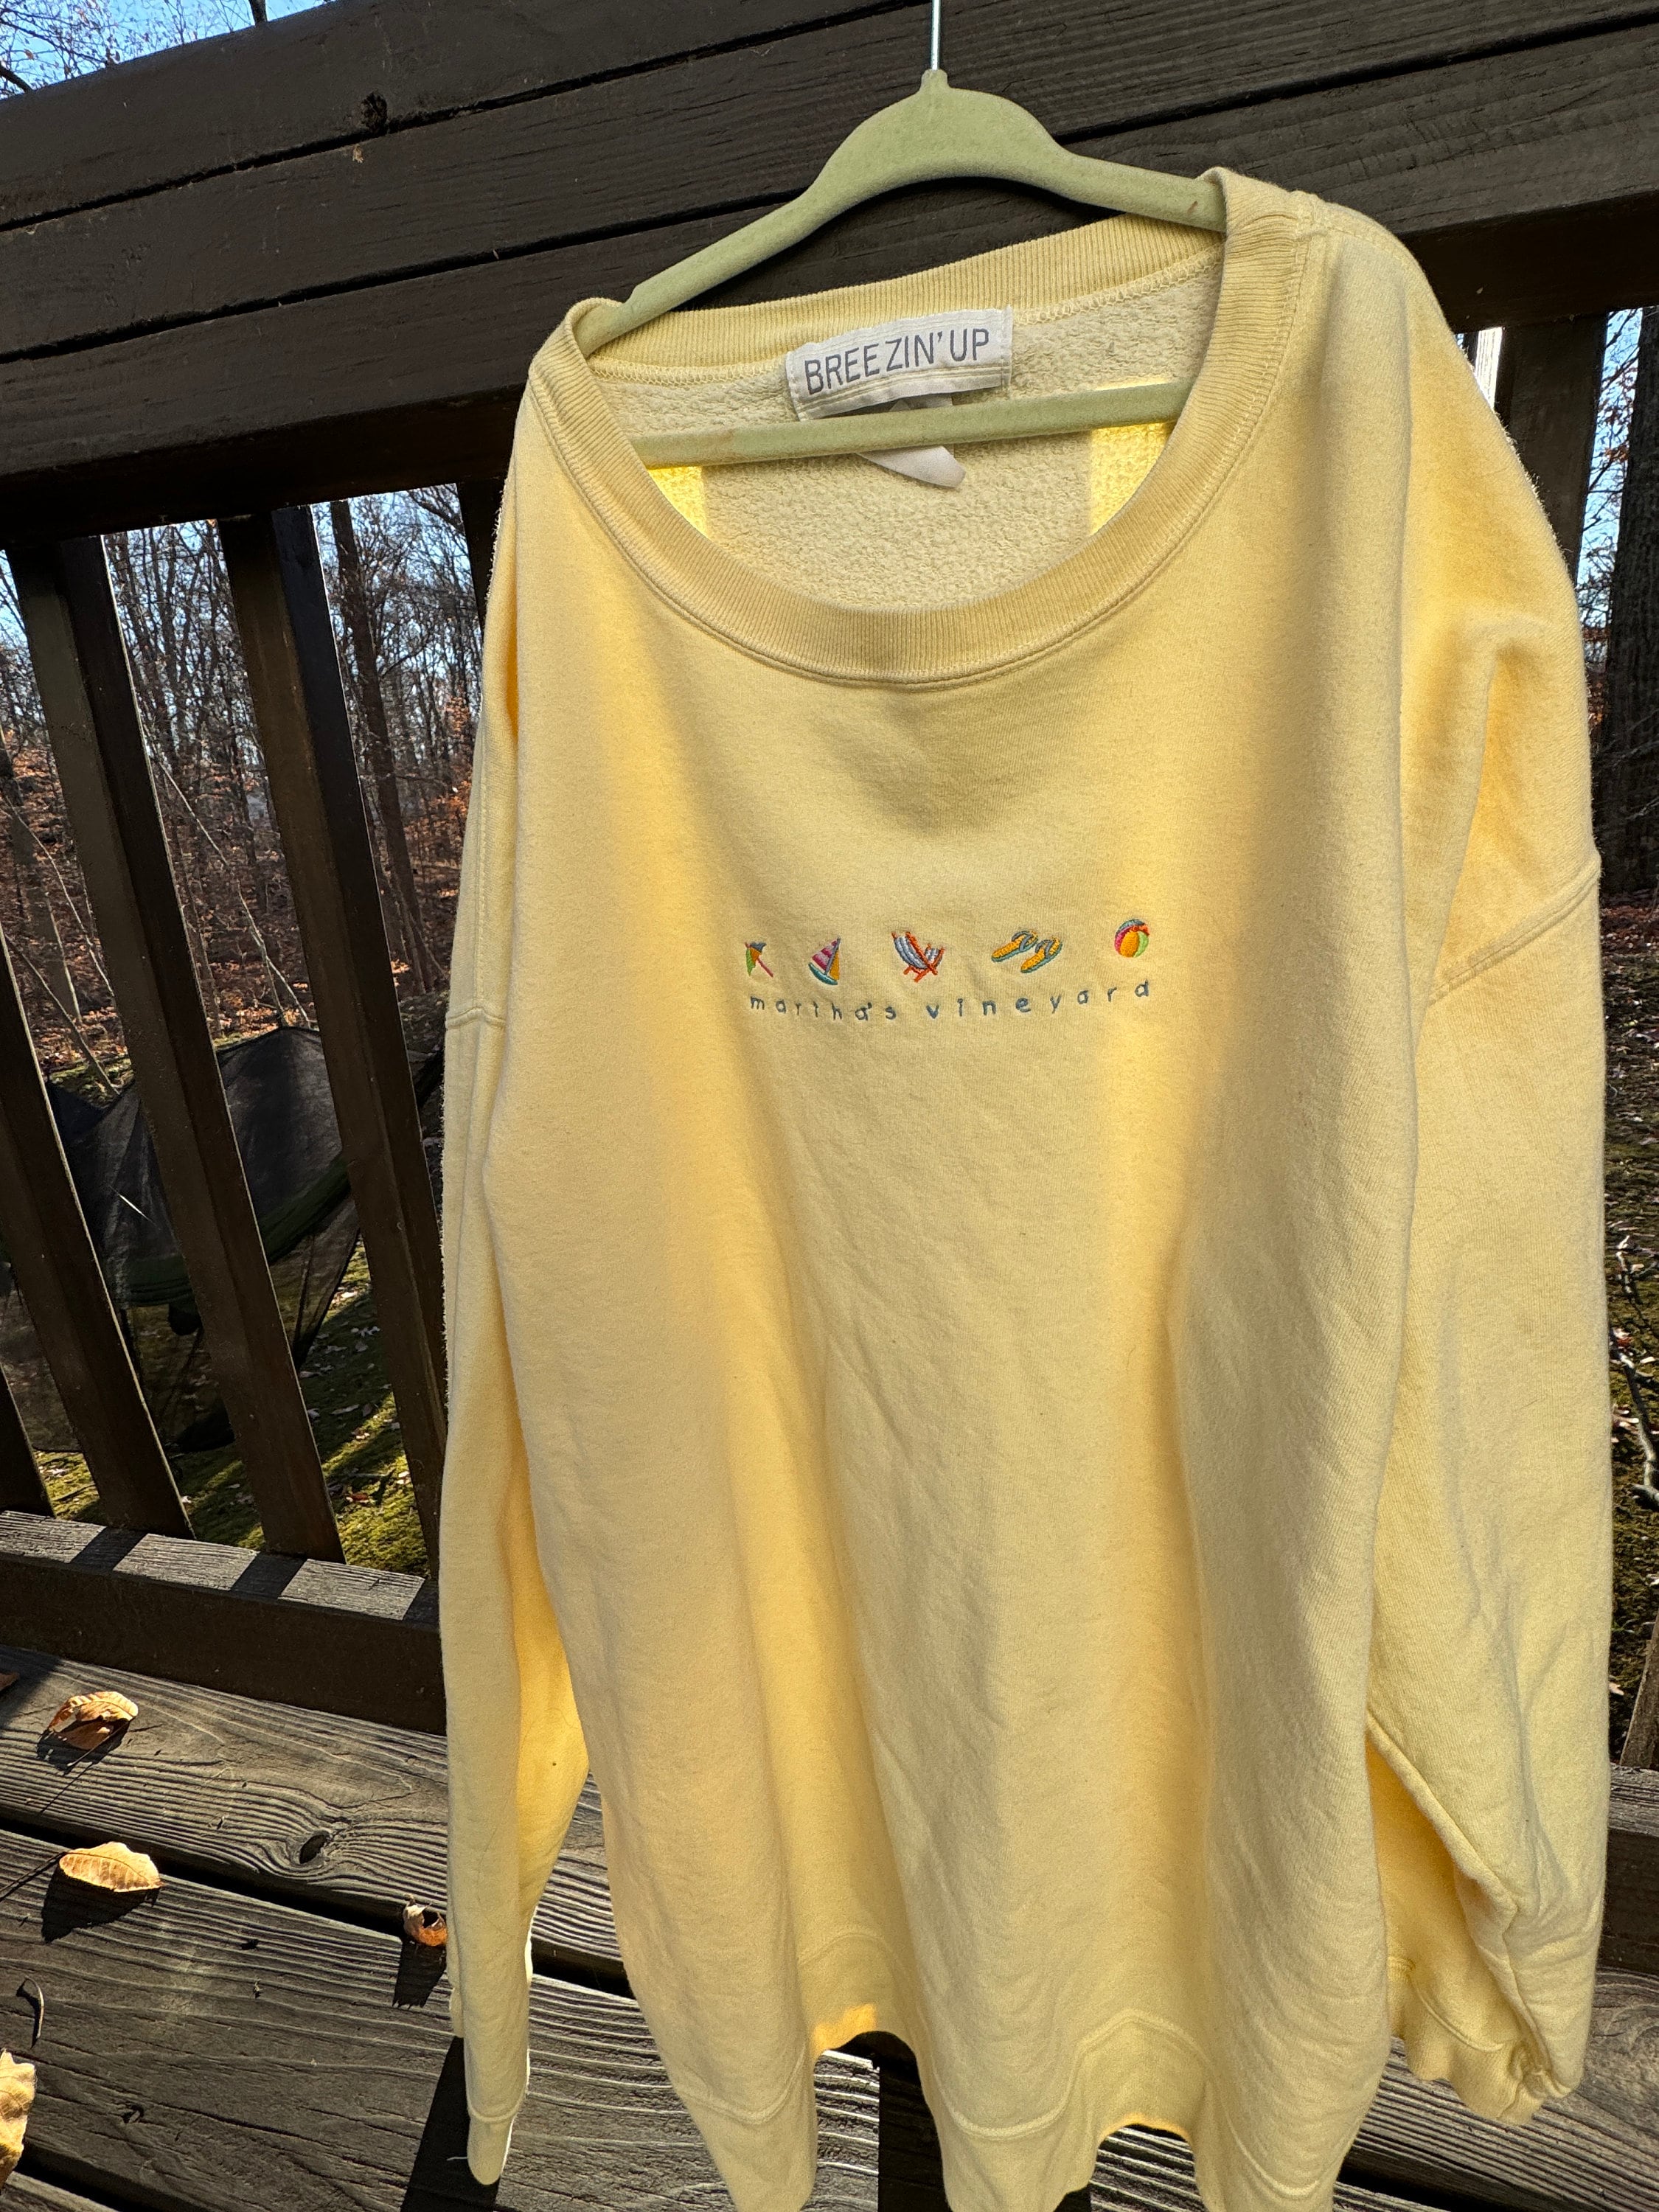 Breezin' up Martha's Vineyard Yellow Embroidered Crewneck Sweater  Sweatshirt Pastel Size XL 